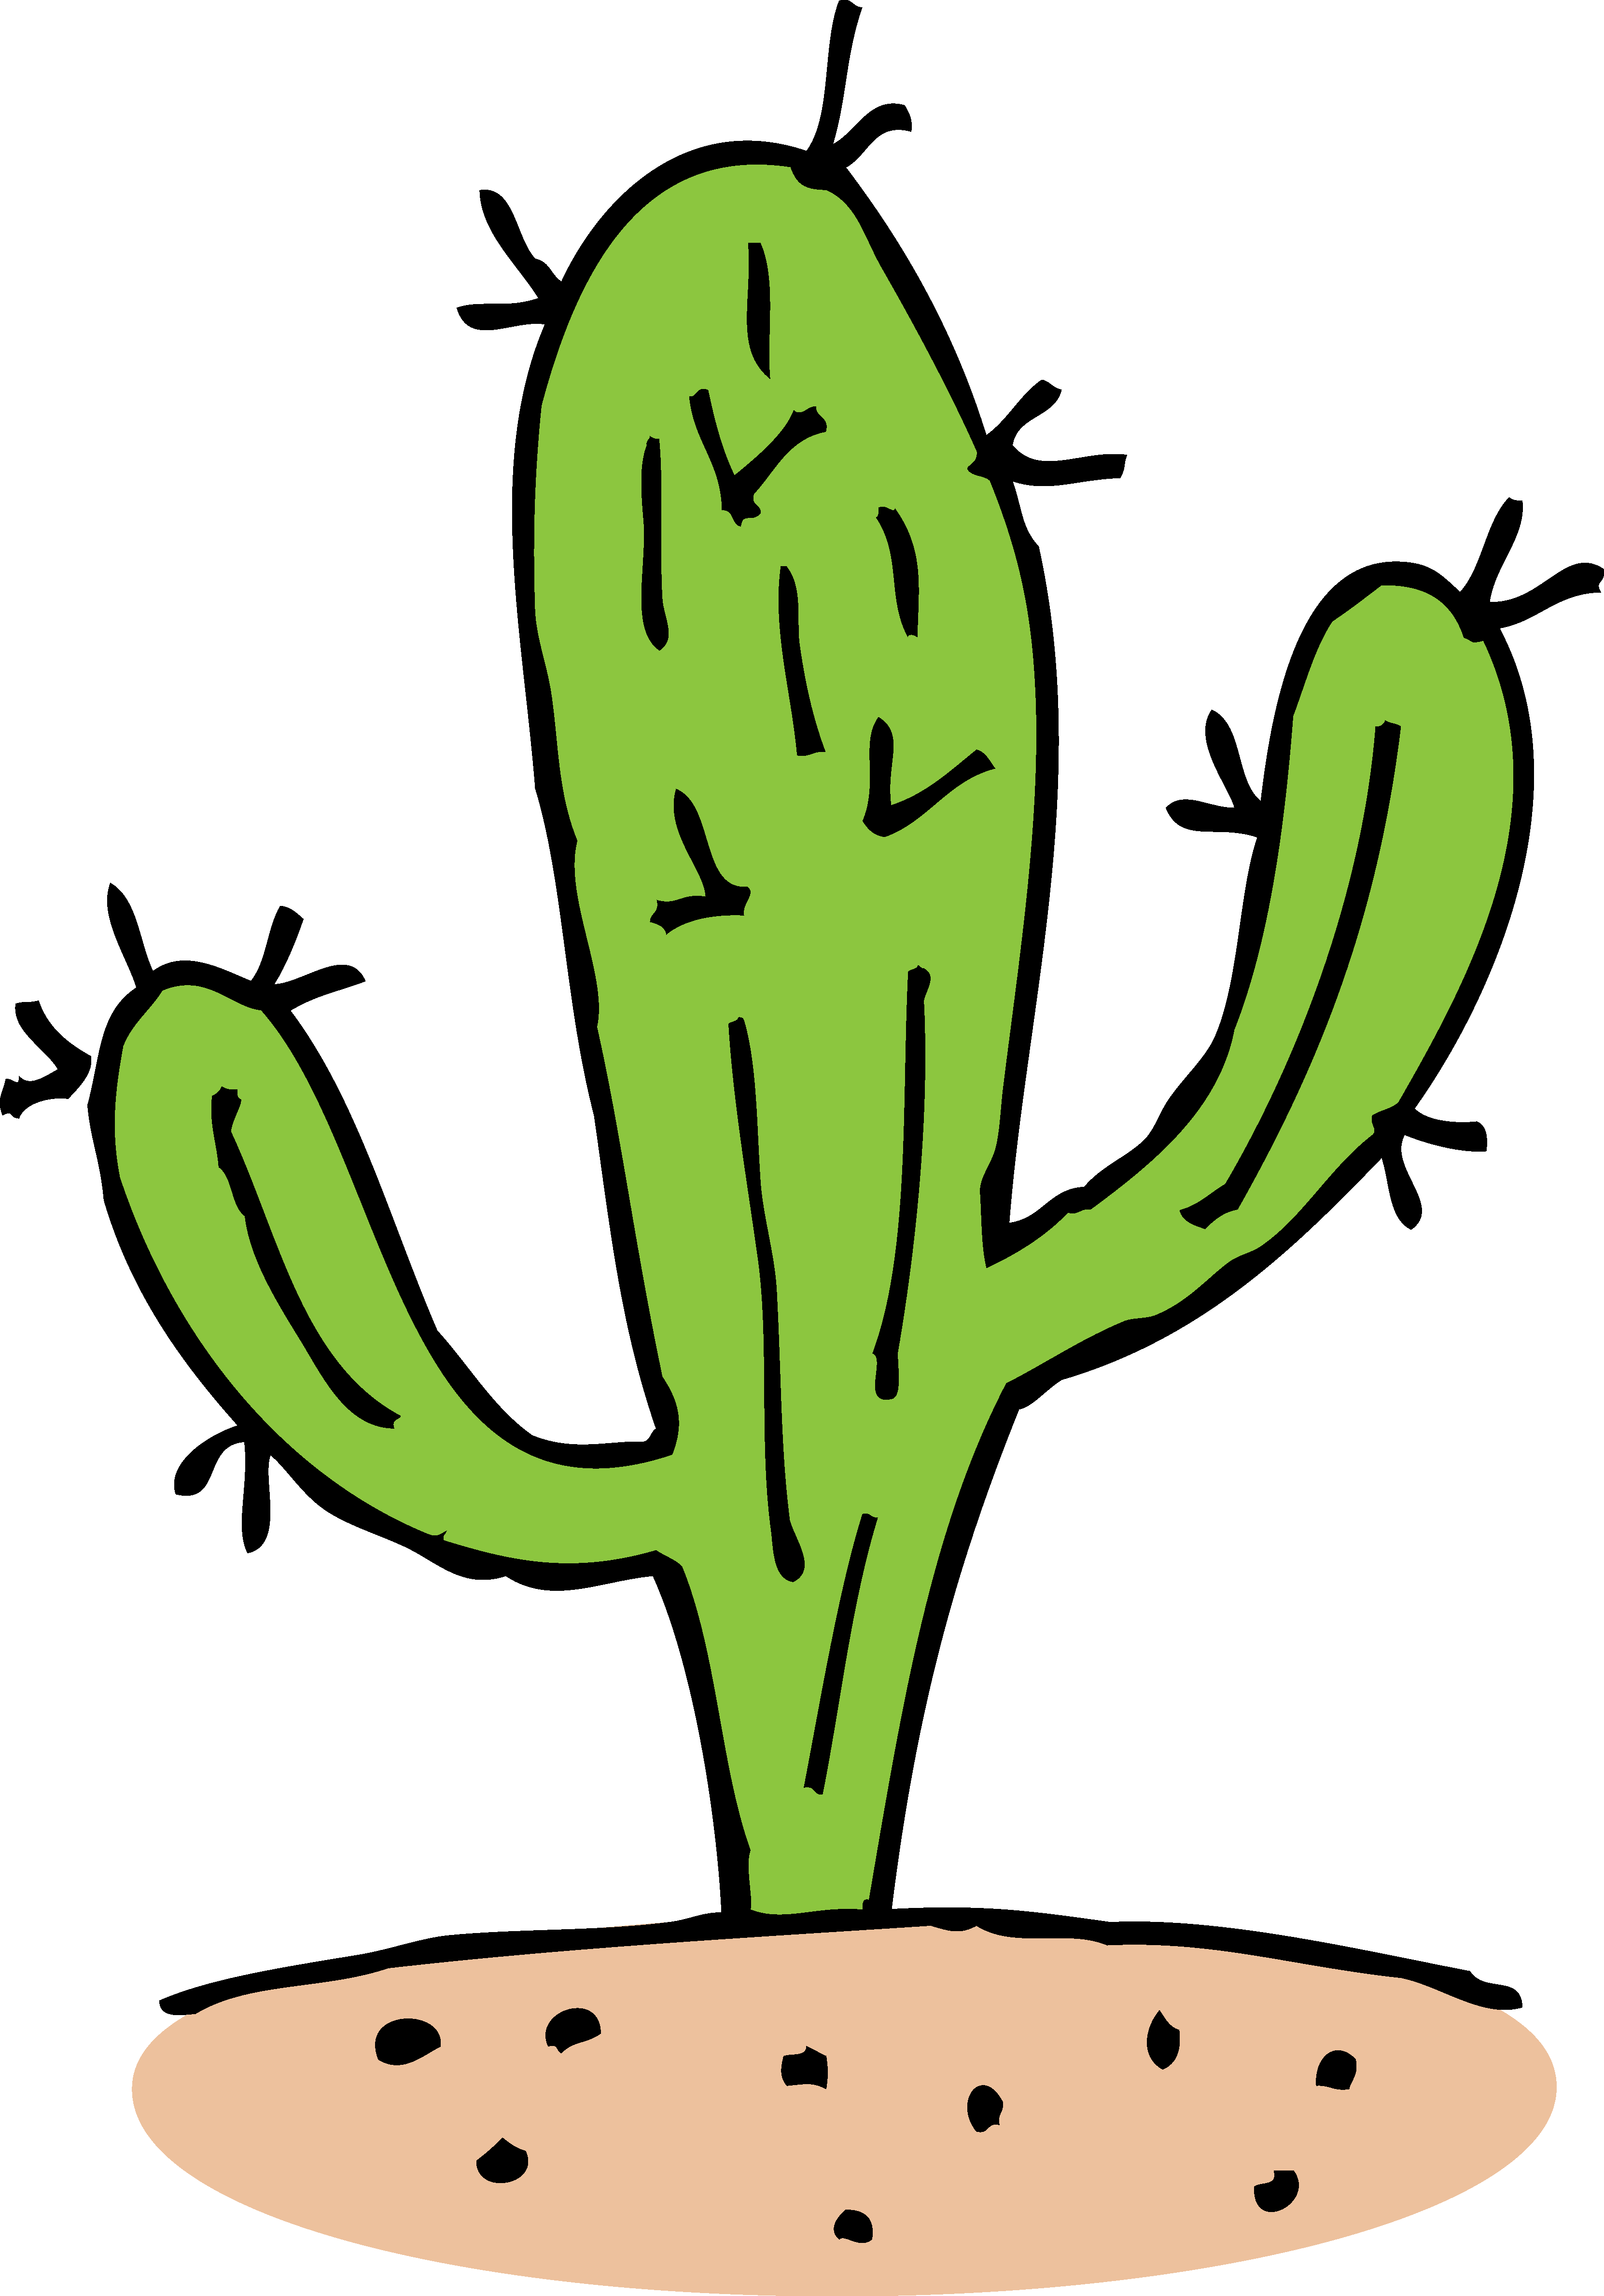 Free Cactus Clip Art, Download Free Cactus Clip Art png images, Free